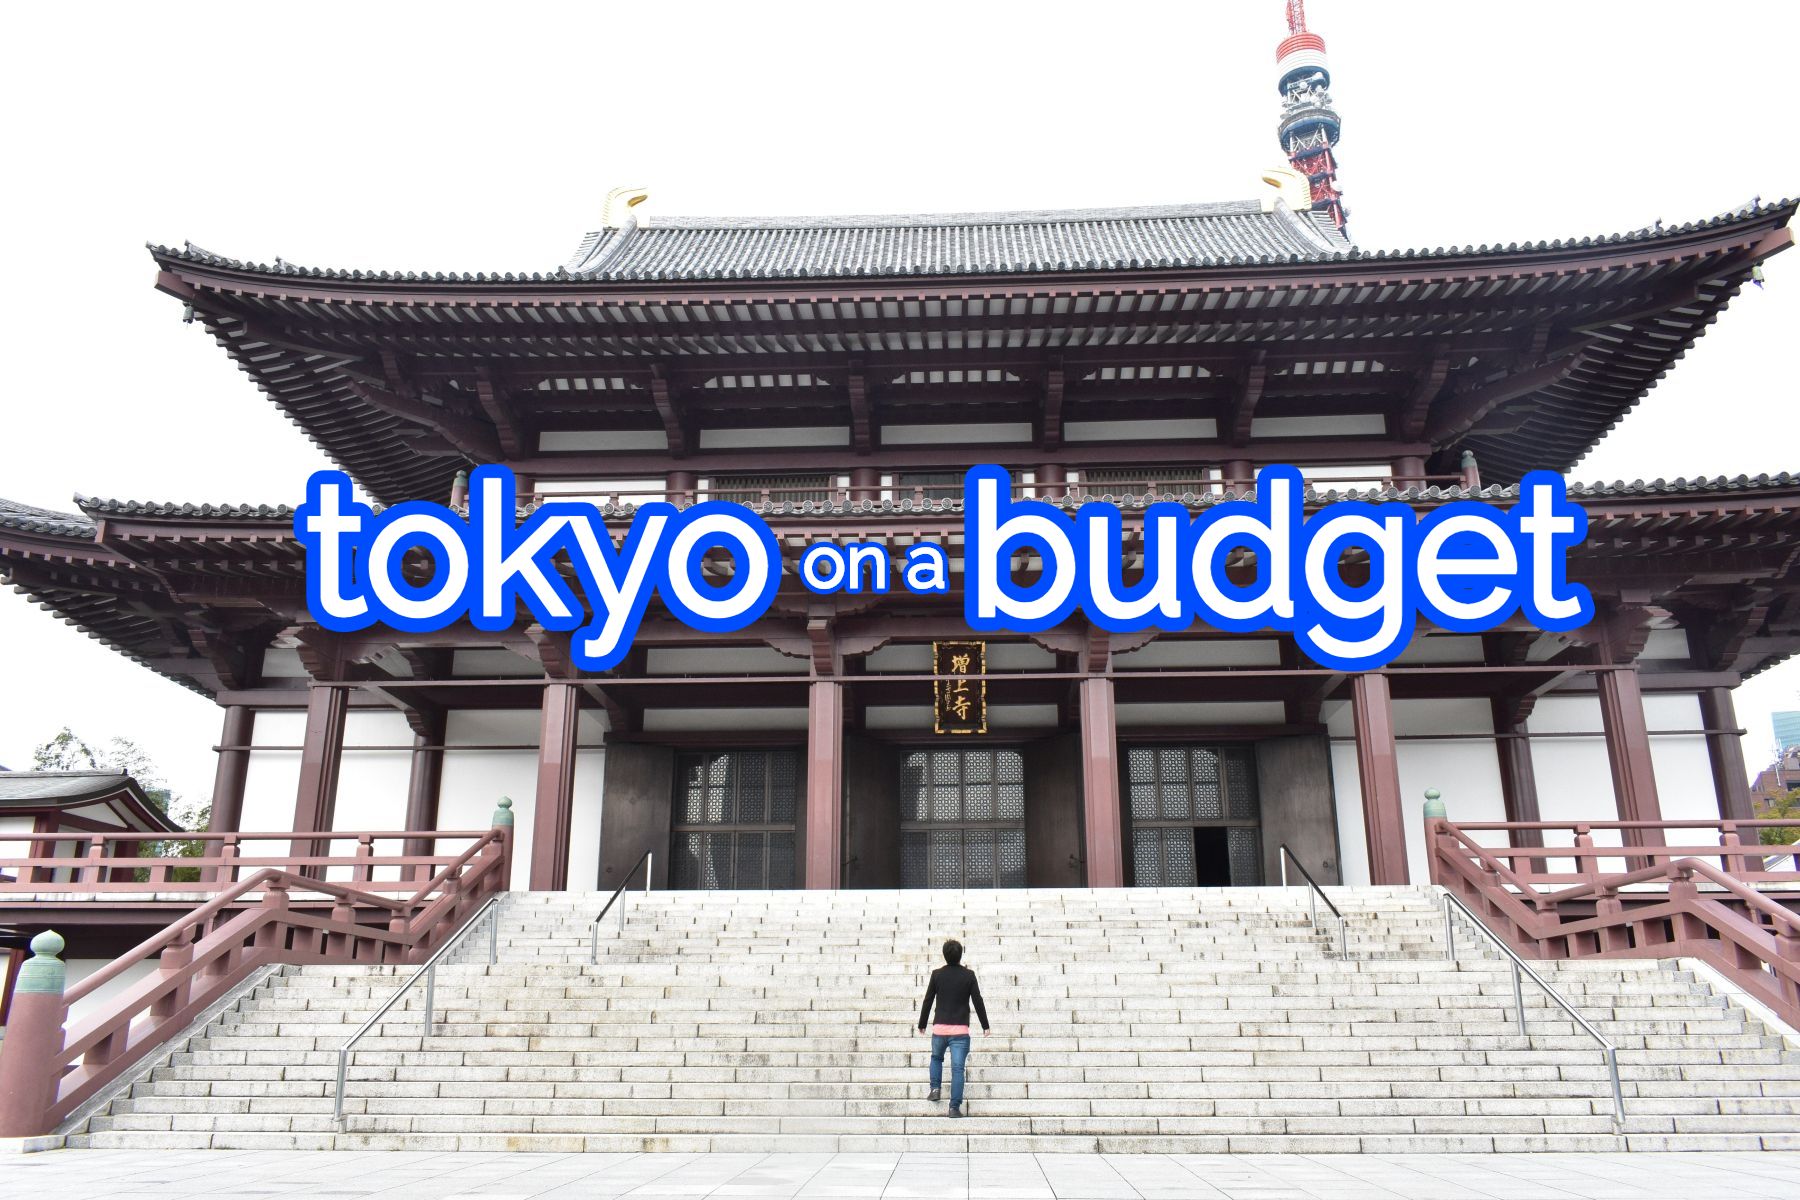 Tokyo budget travel guide